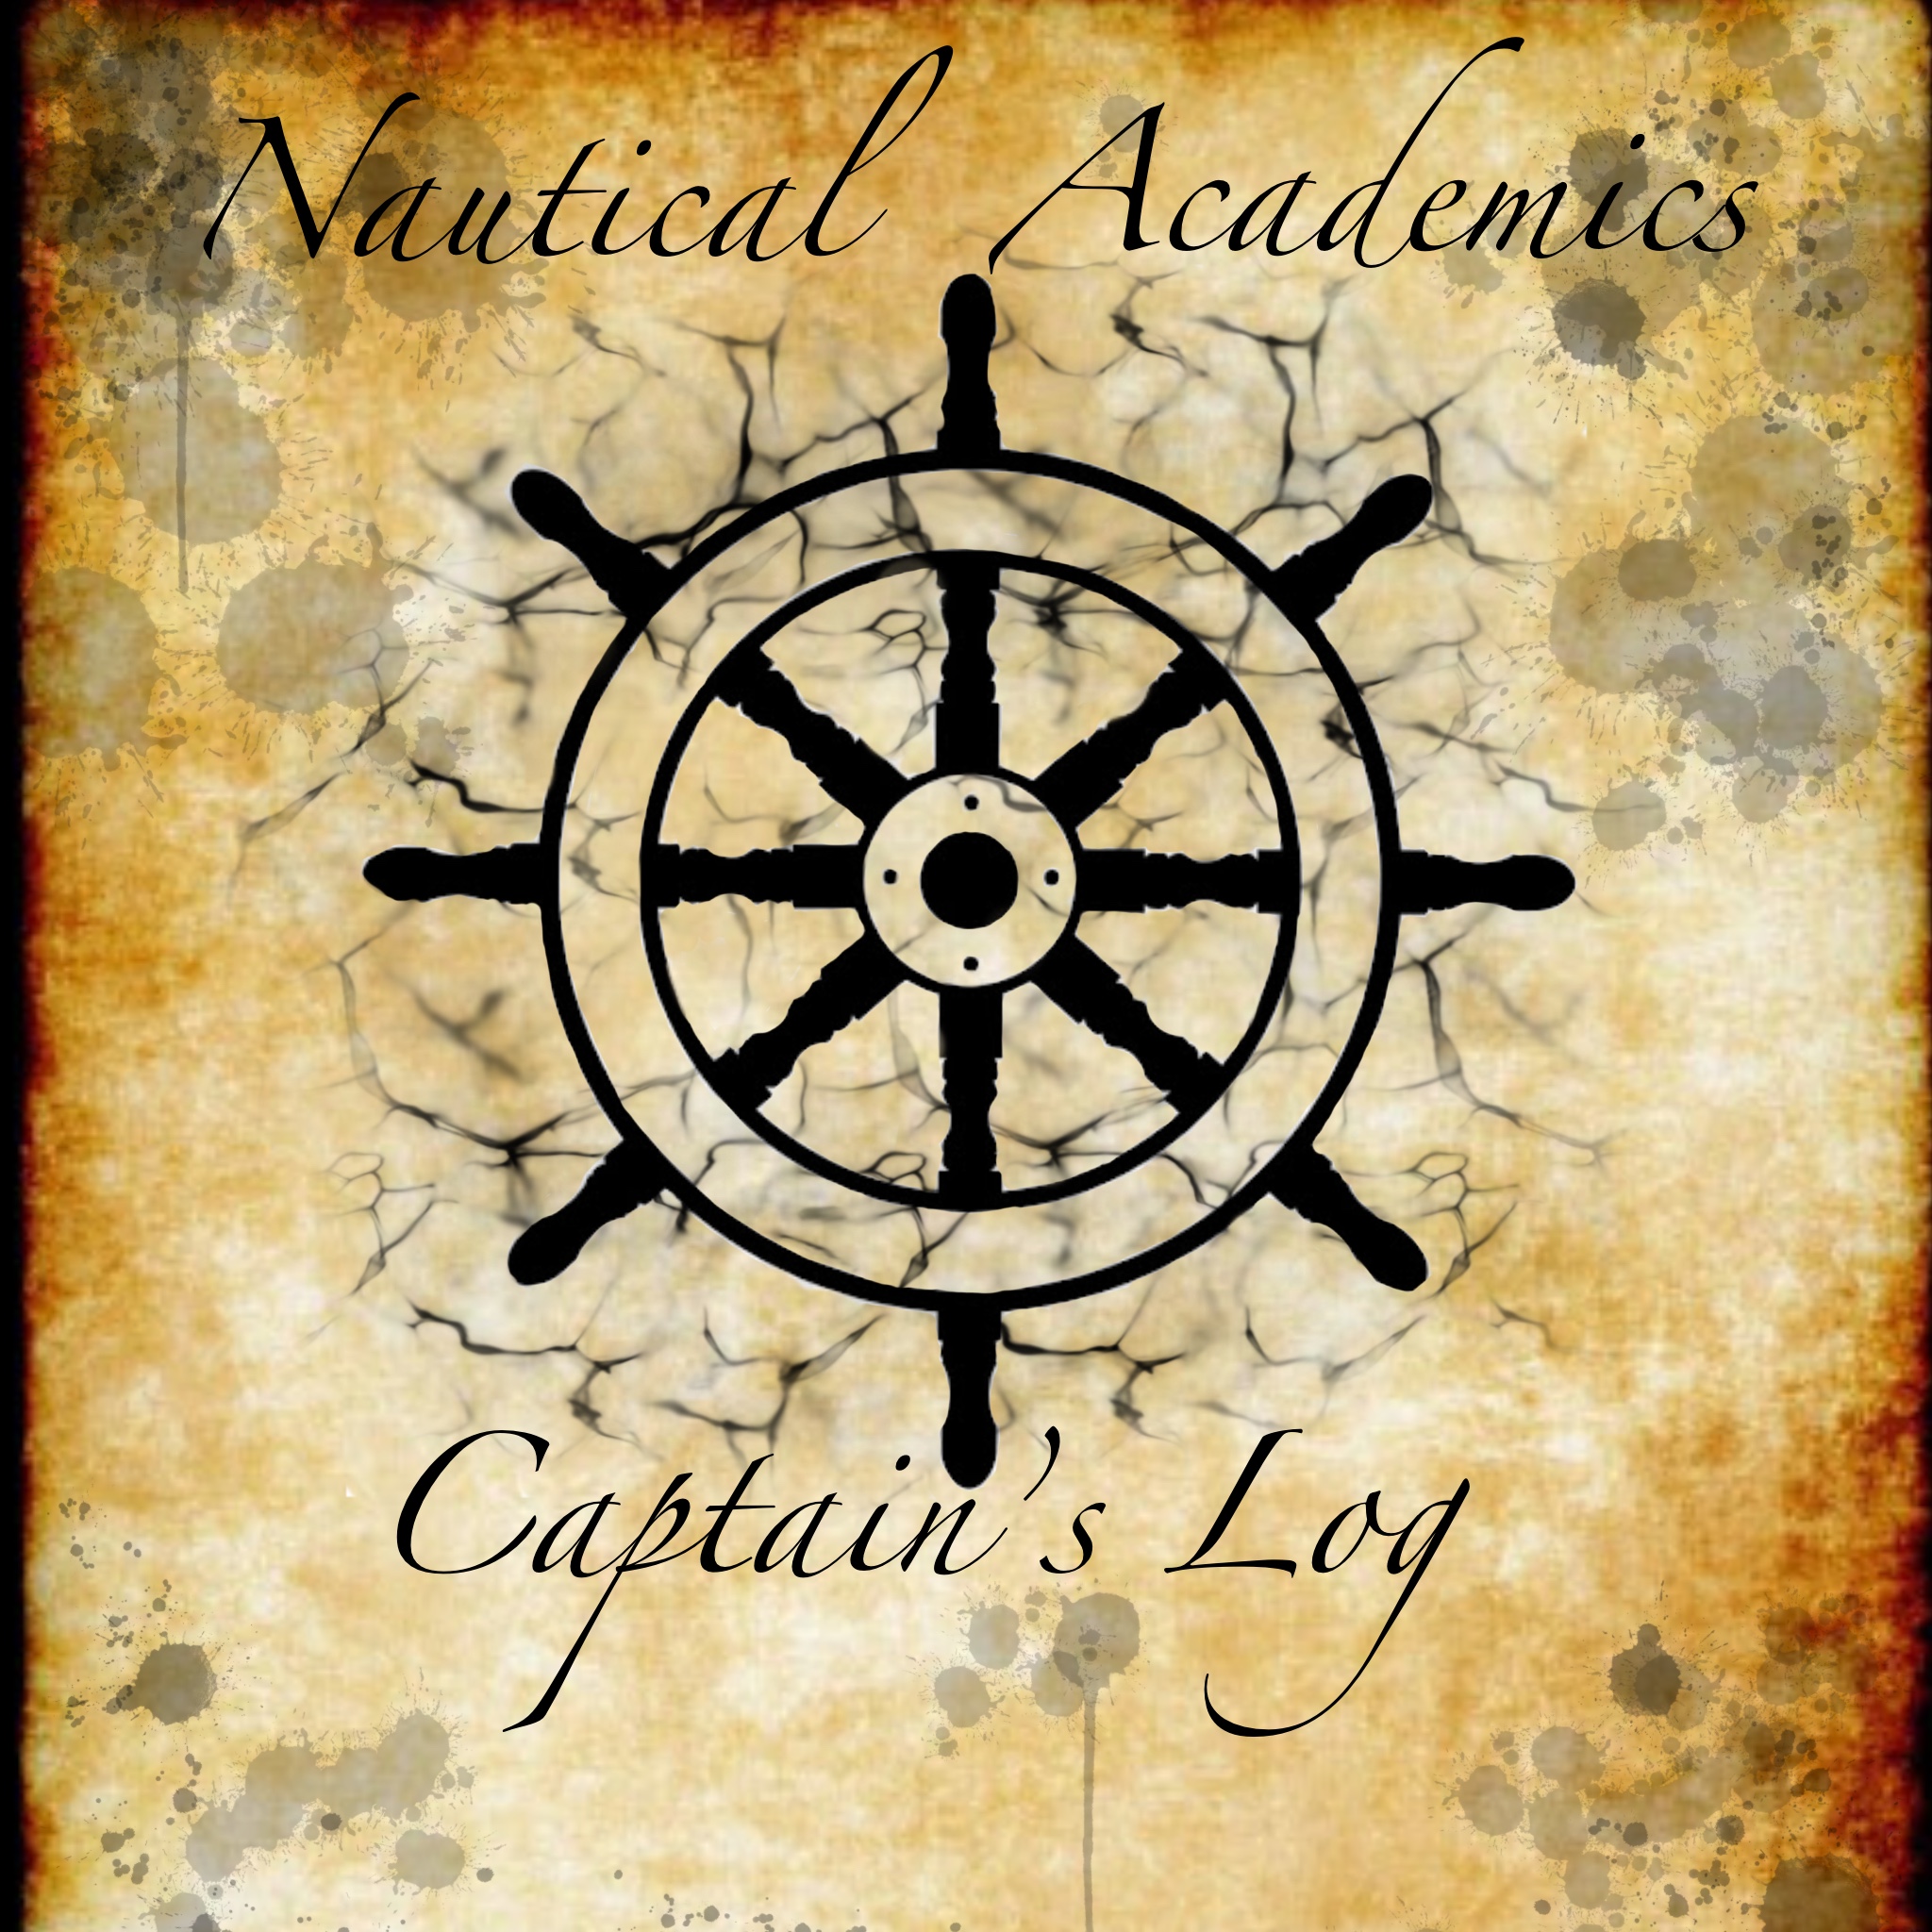 Nautical Academics Captains Log